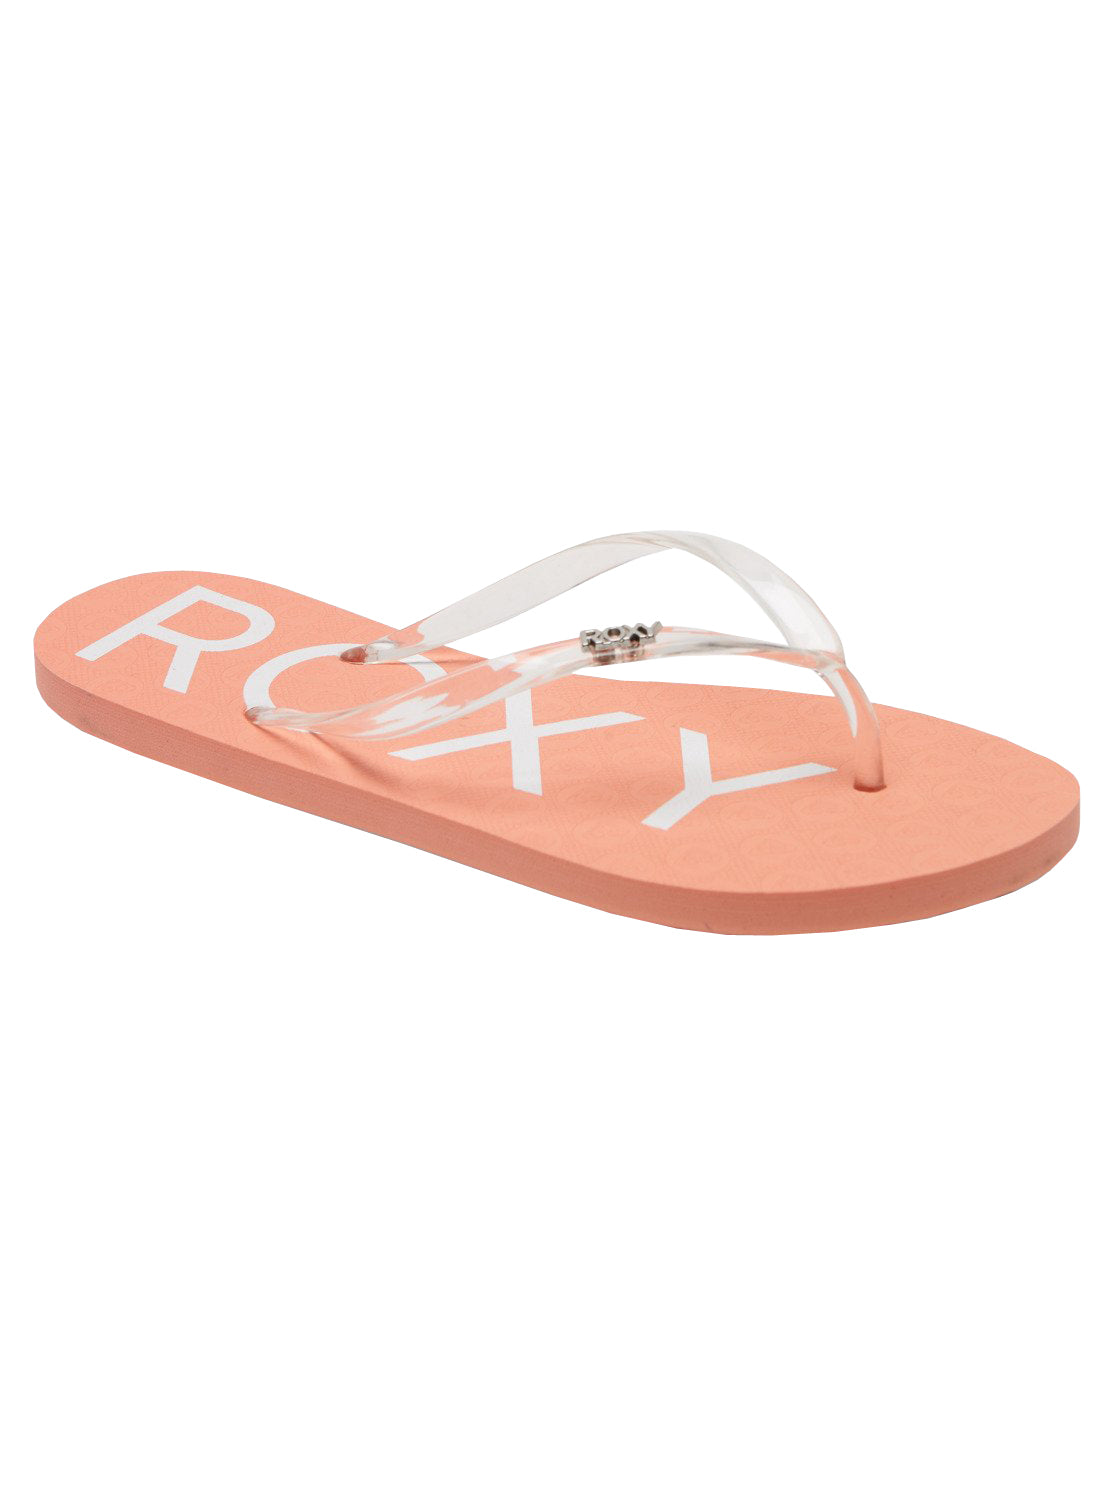 Roxy Viva Jelly Womens Sandal HCO-Hot Coral 9